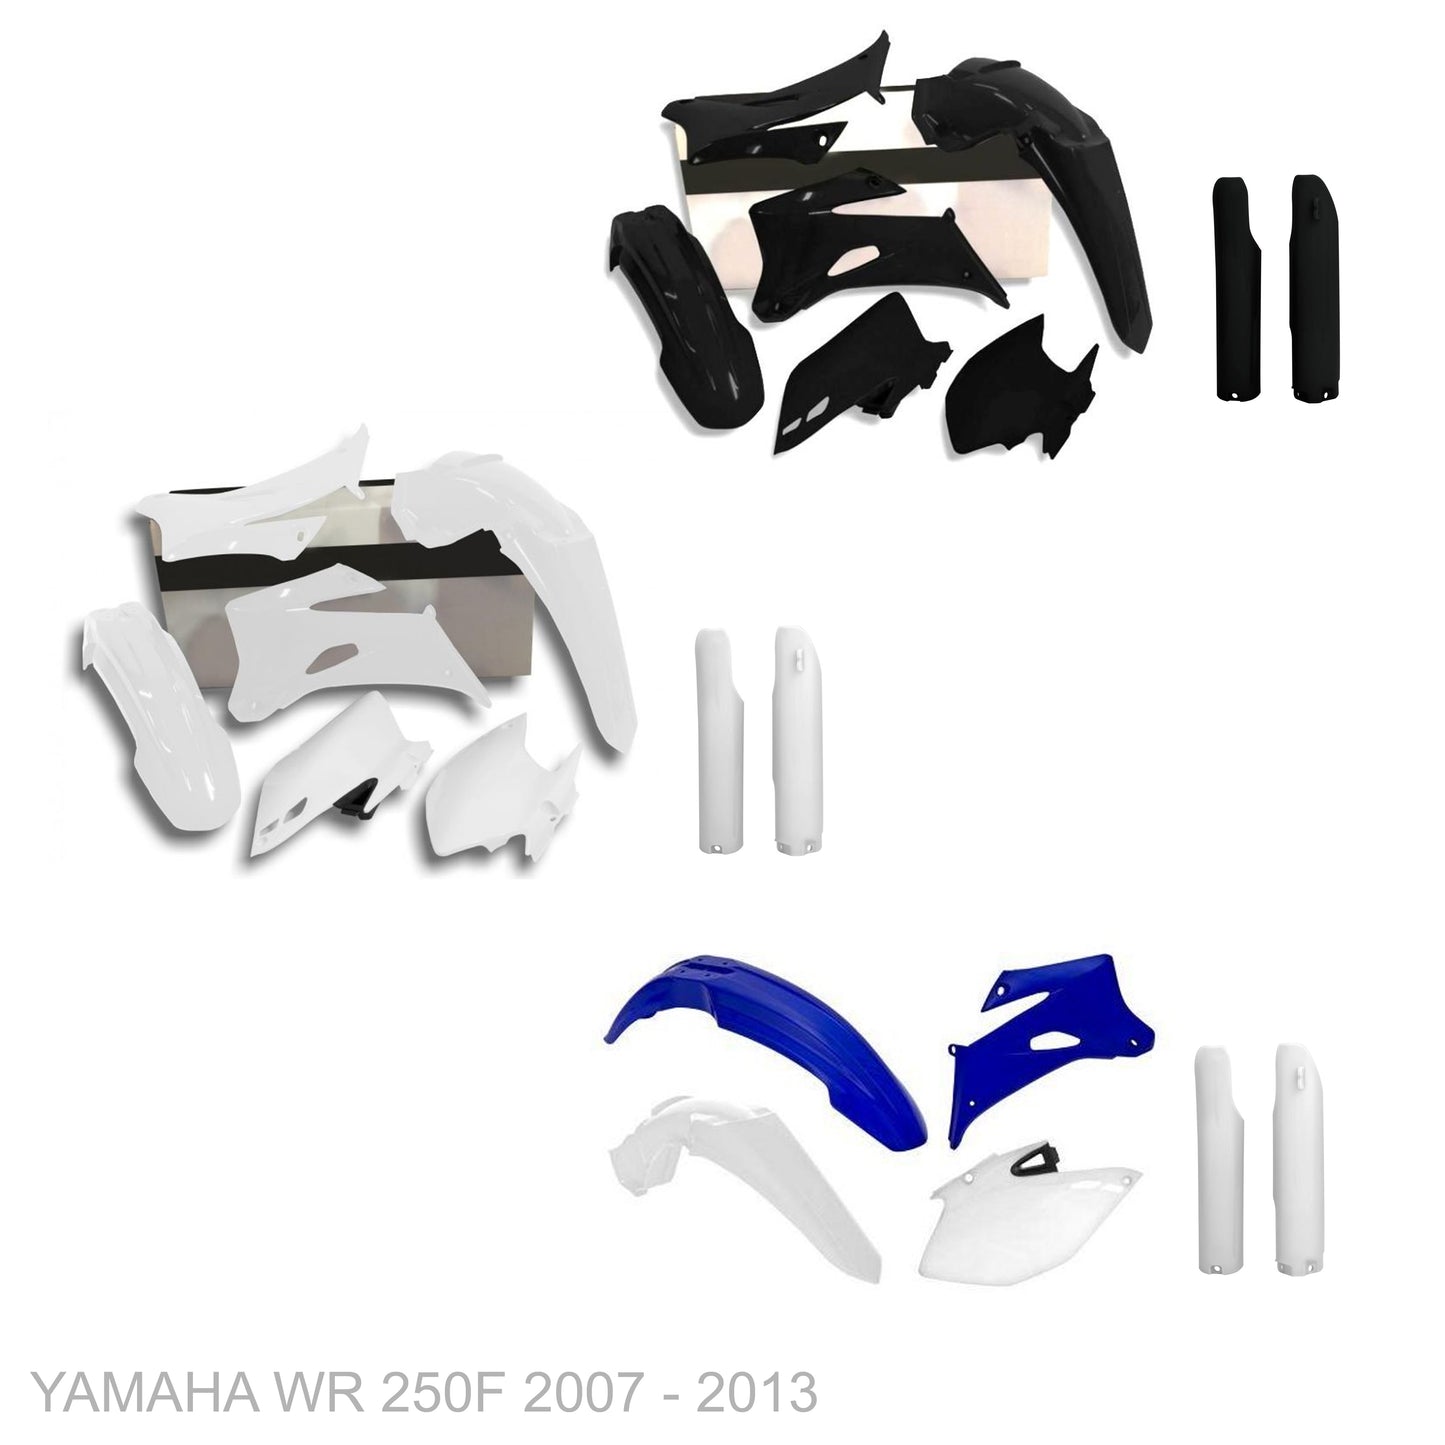 YAMAHA WR 250F 2007 - 2013 Start From Scratch Graphics Kits